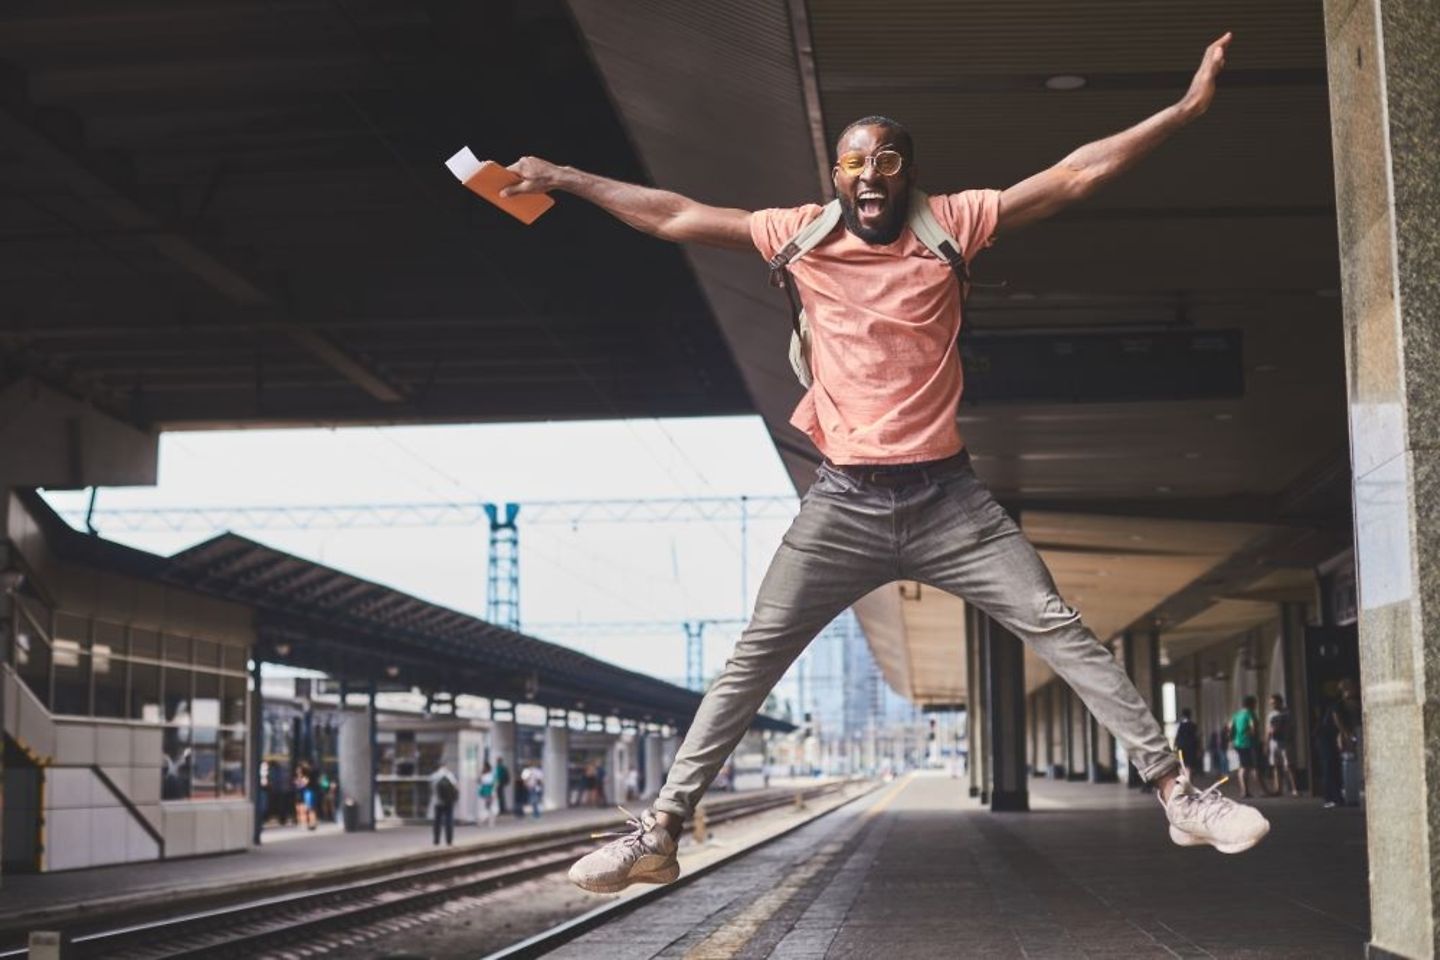 Passenger on train station jumping celebrating success